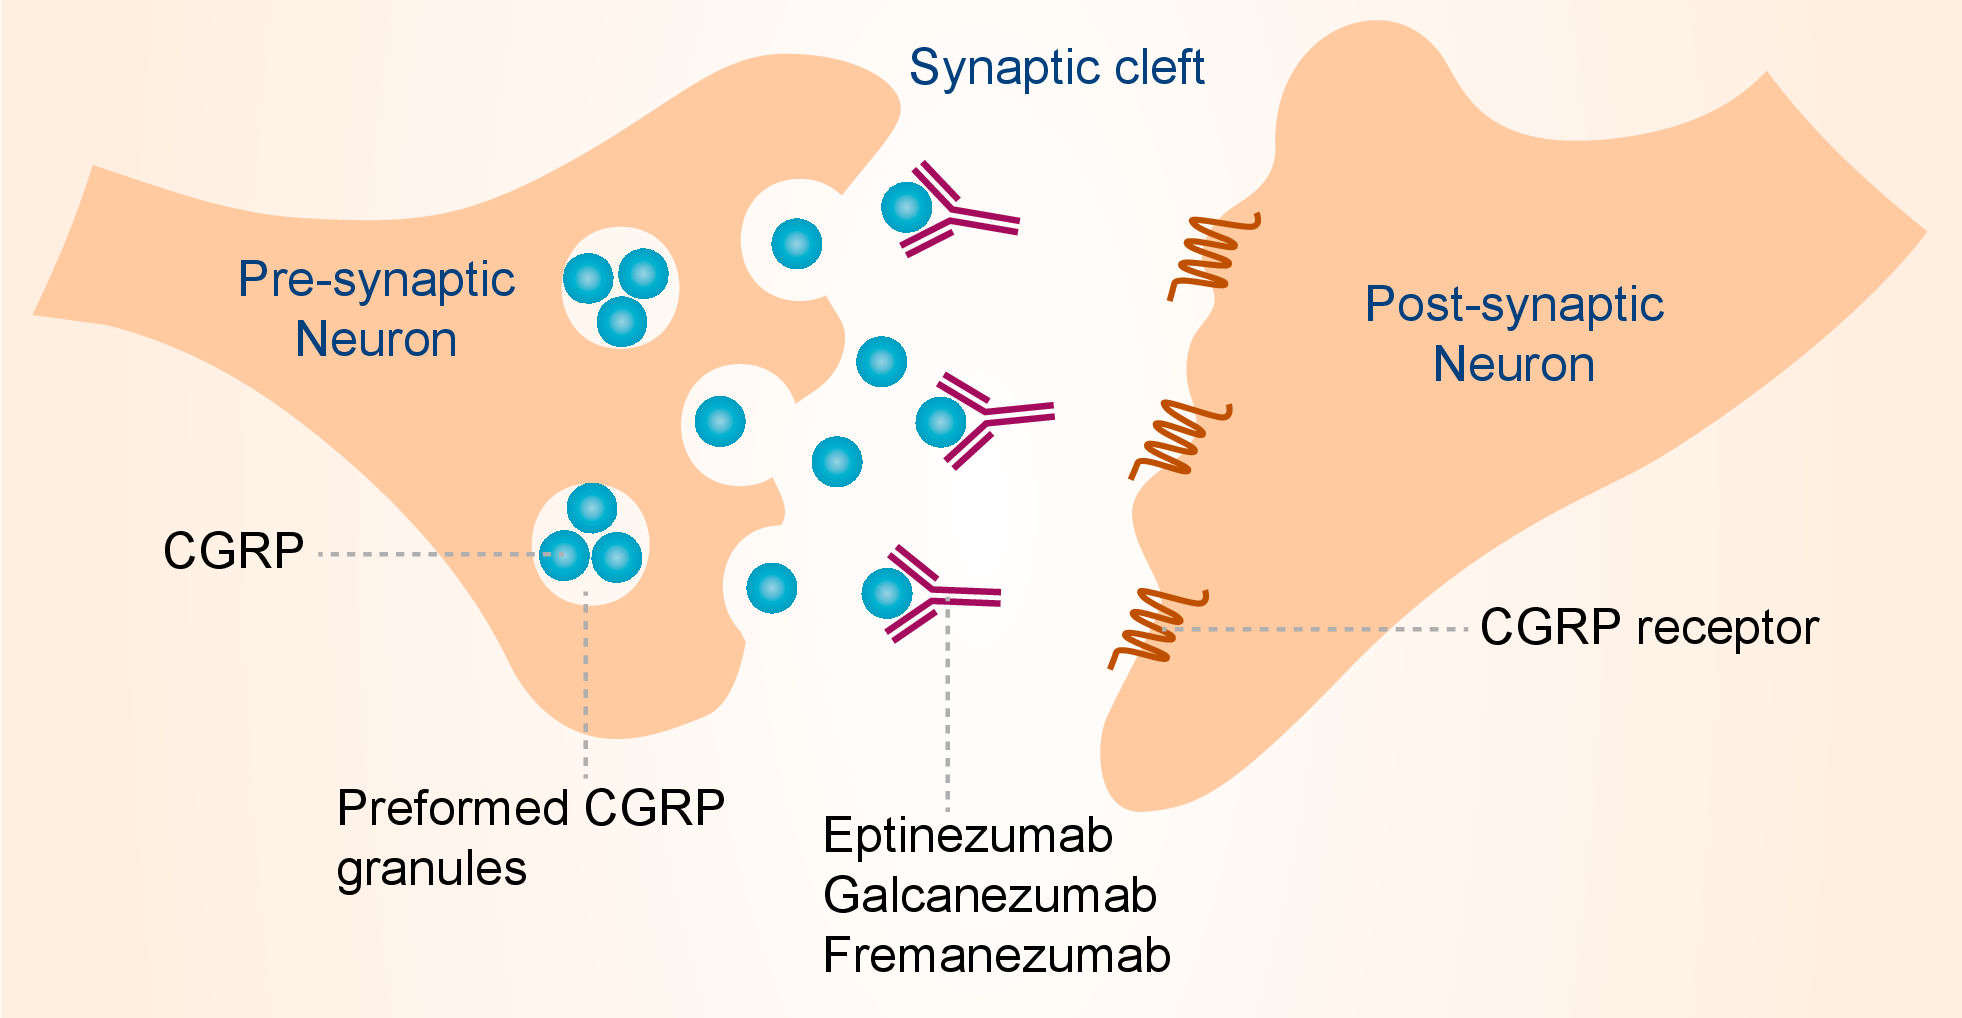 Mechanism of action of eptinezumab